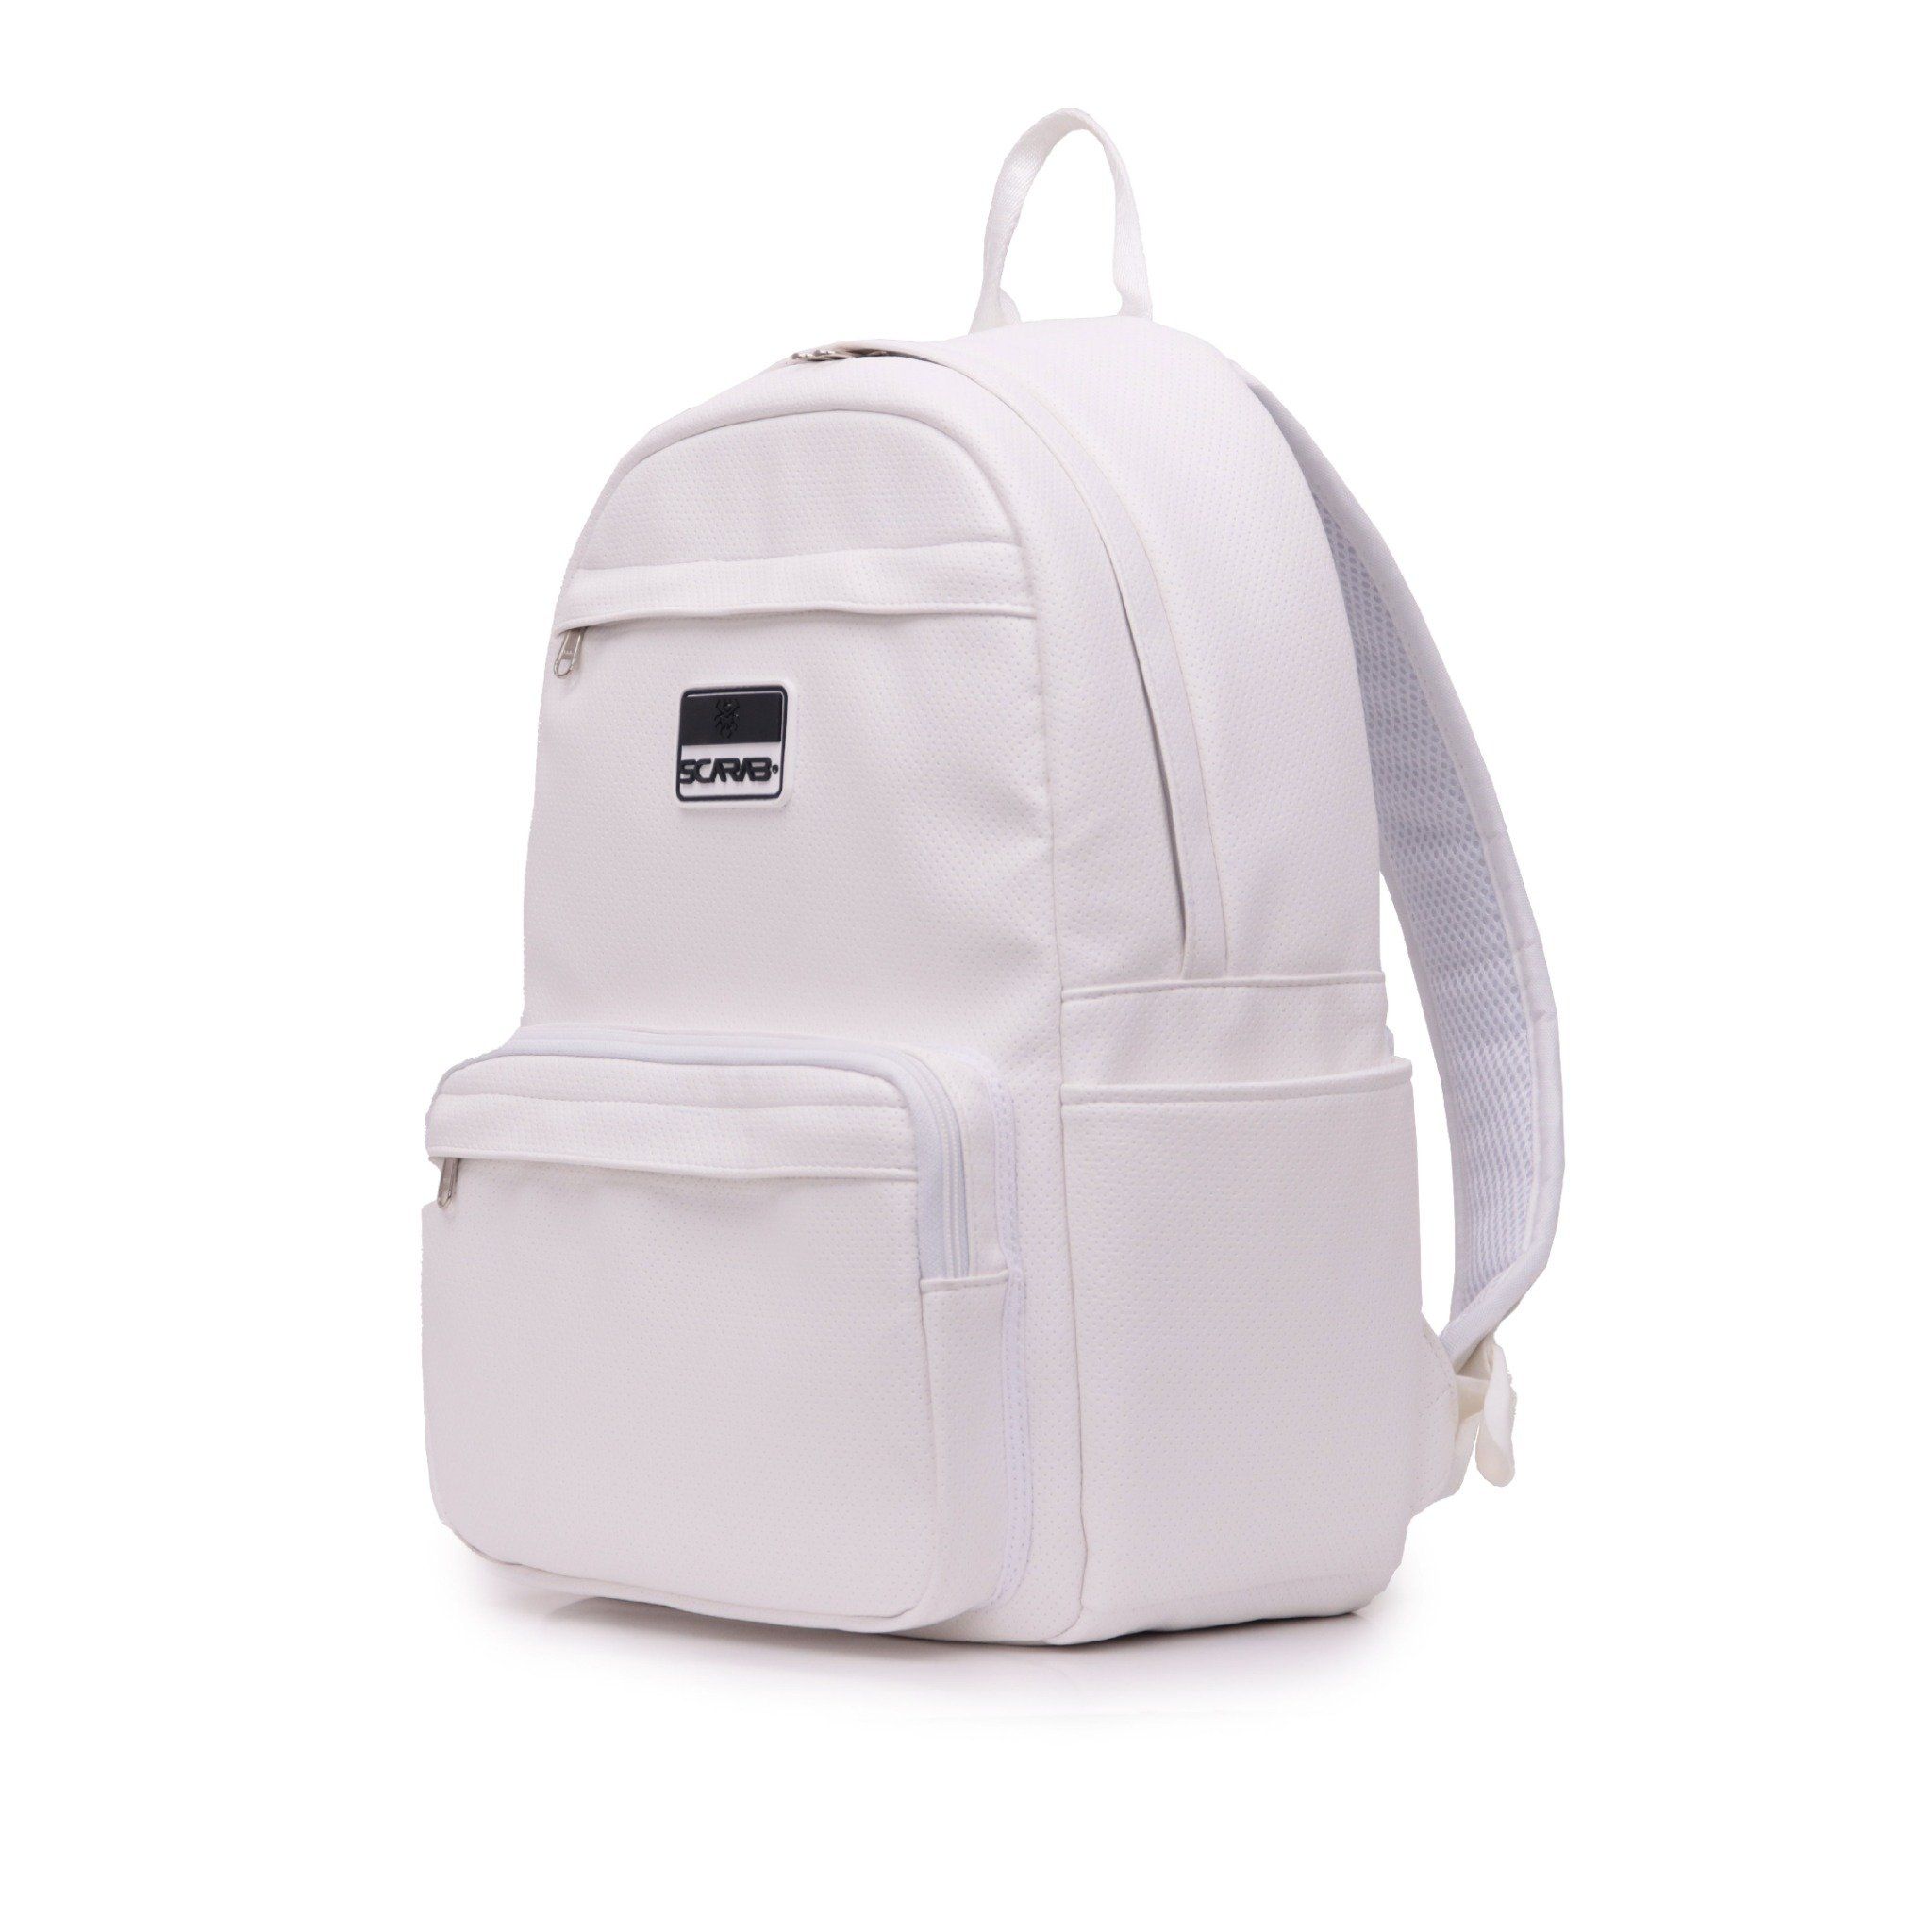  Multi Leather Backpack - White Dot 